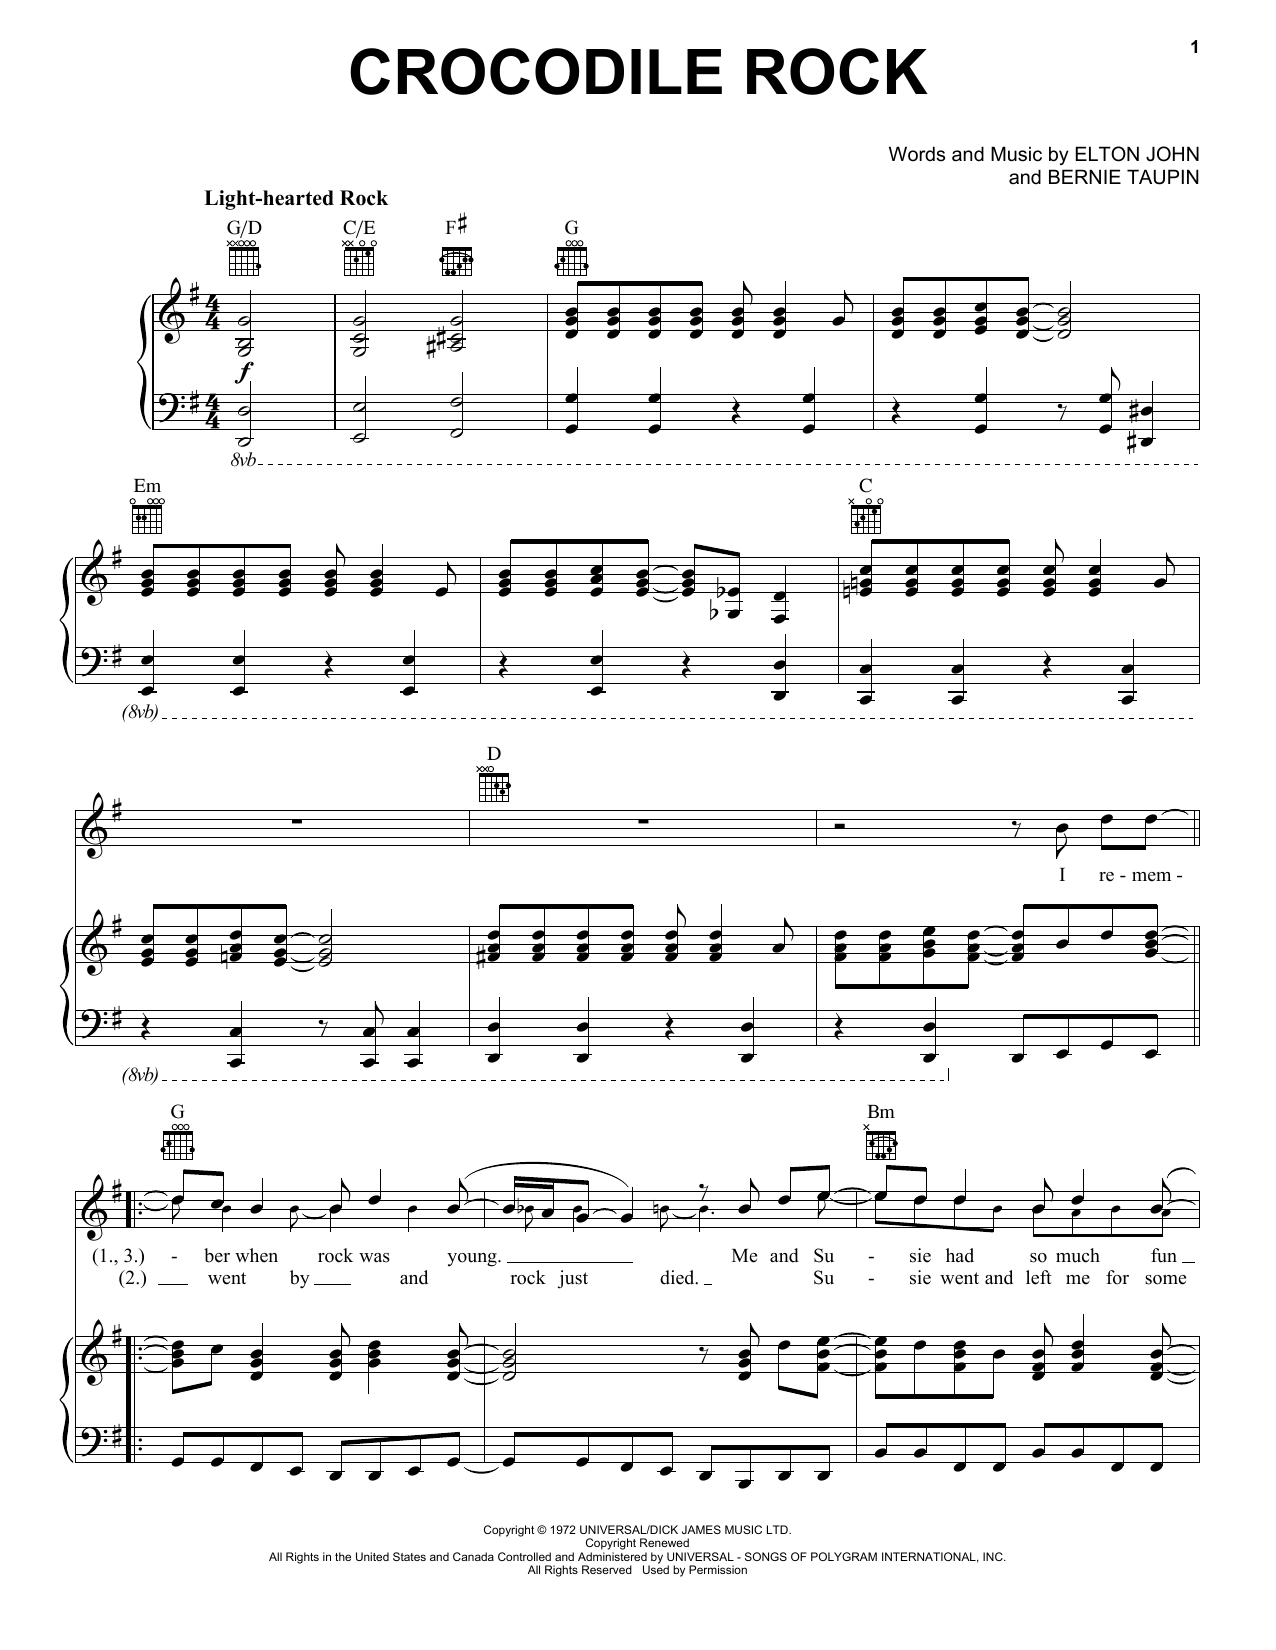 Download Elton John Crocodile Rock Sheet Music and learn how to play Ukulele PDF digital score in minutes